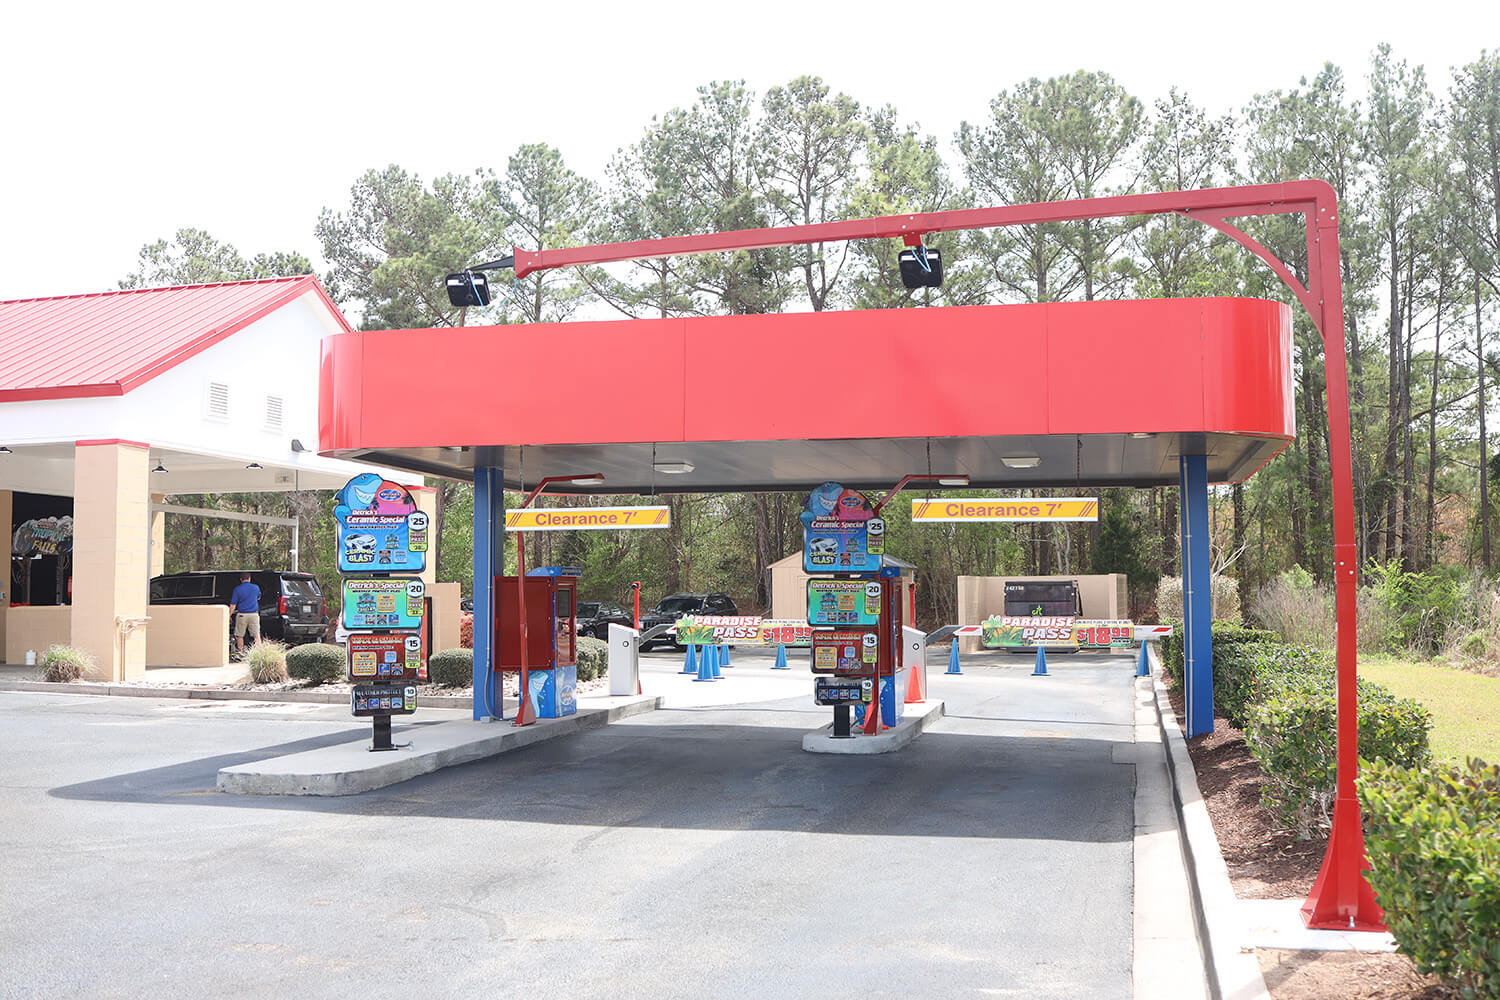 Detrick’s Car Wash entrance in South Carolina